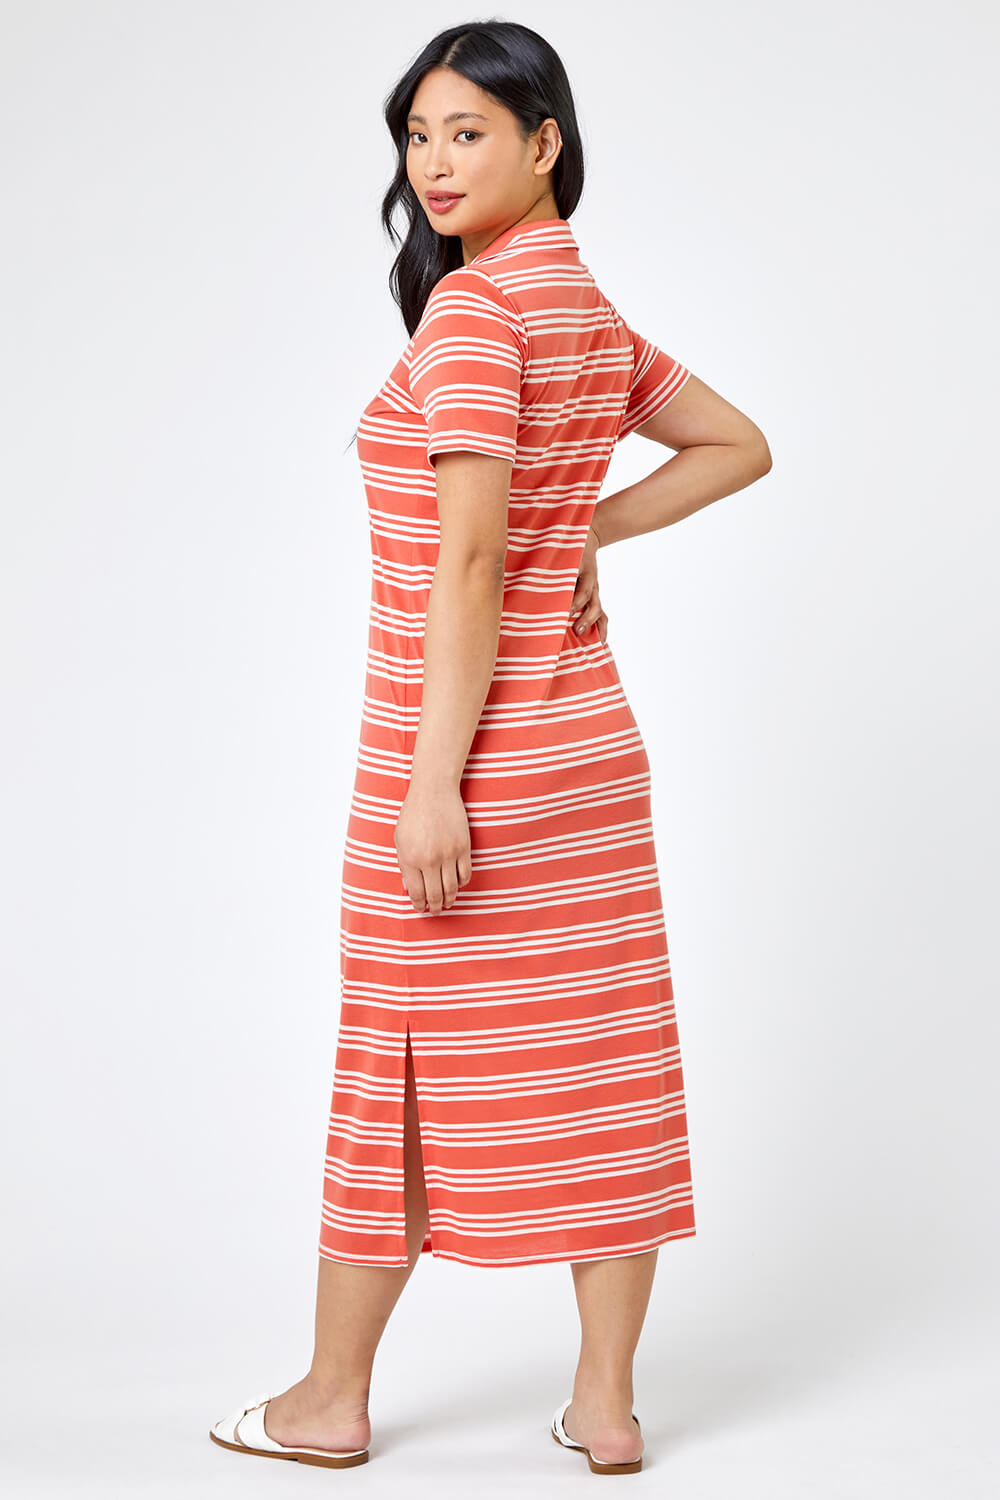 CORAL Petite Stripe Print Polo Shirt Dress, Image 2 of 5